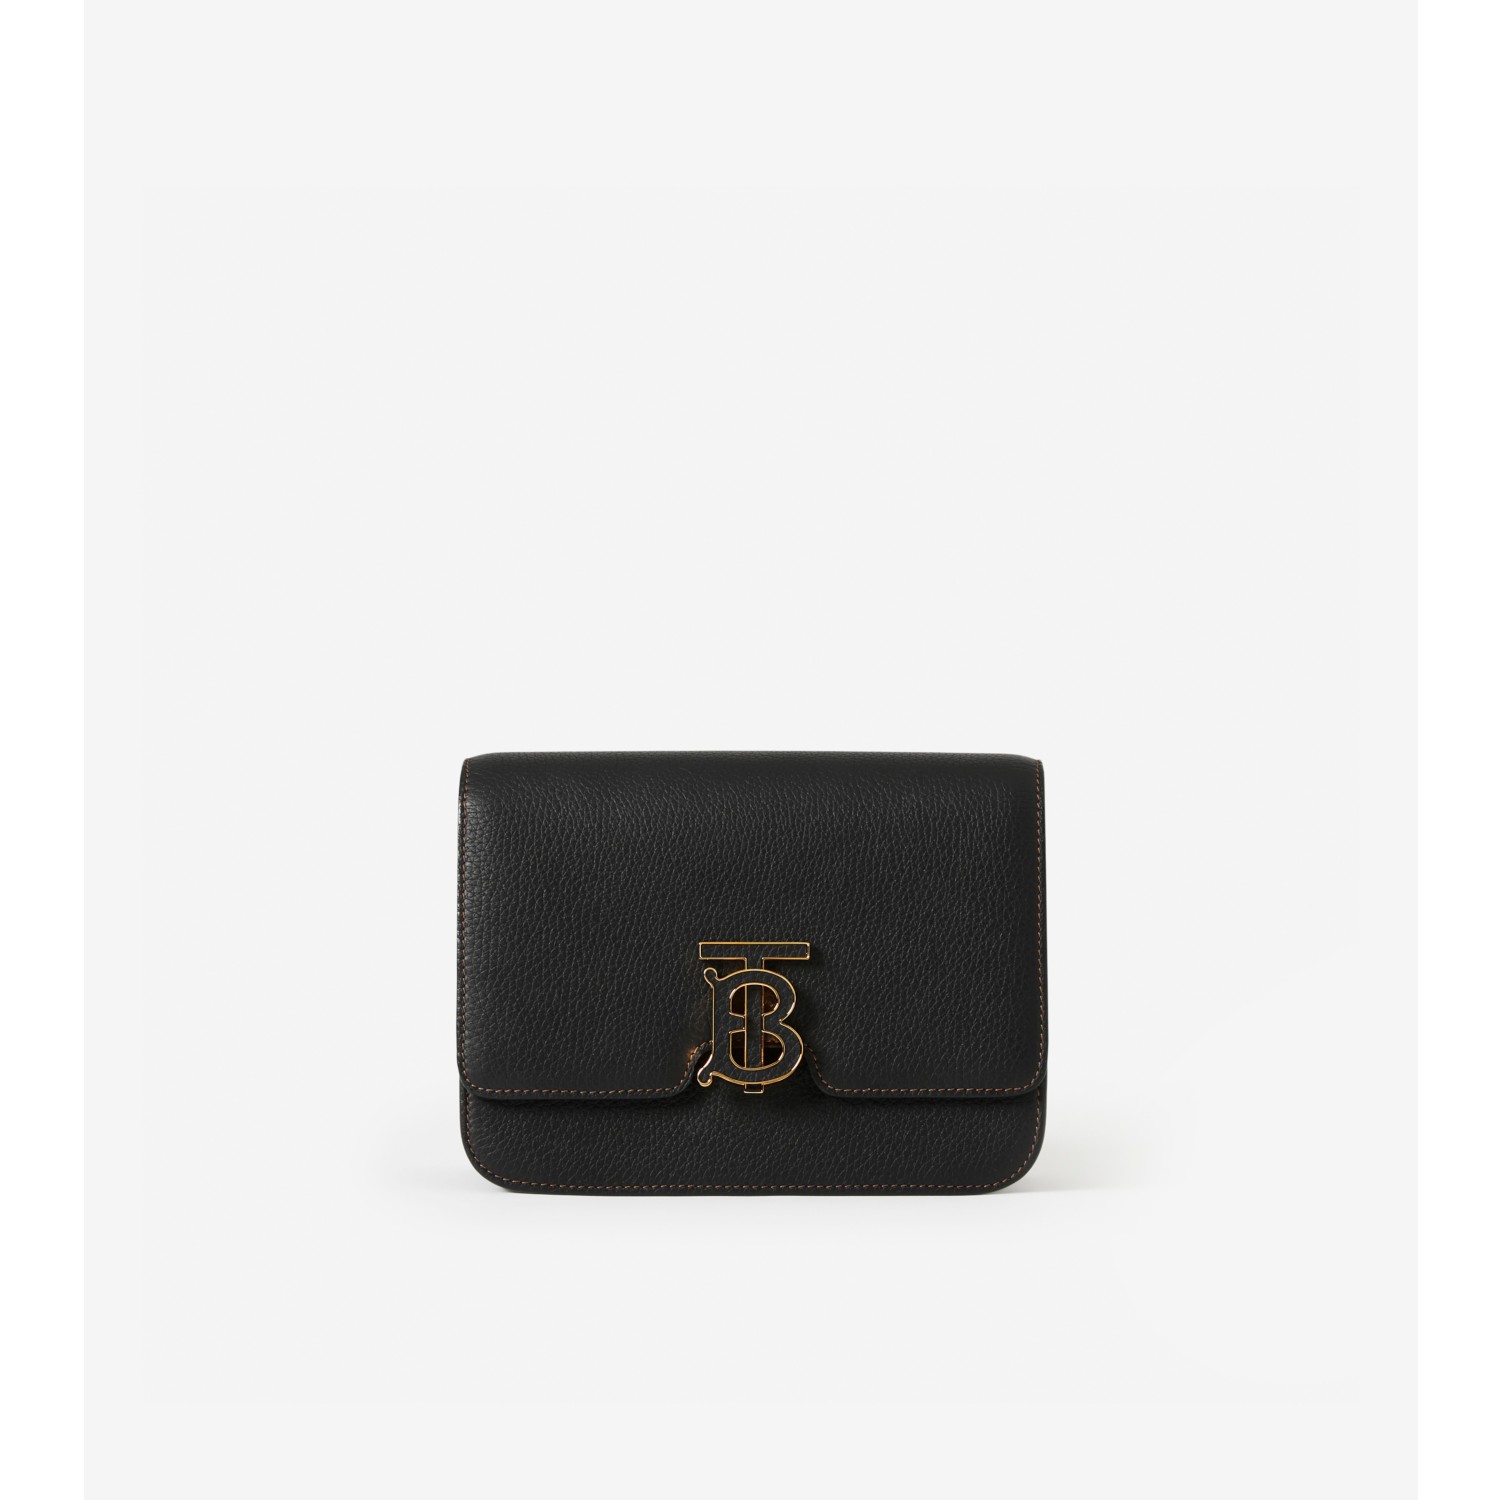 Burberry Small Monogram Leather Tb Bag - Black